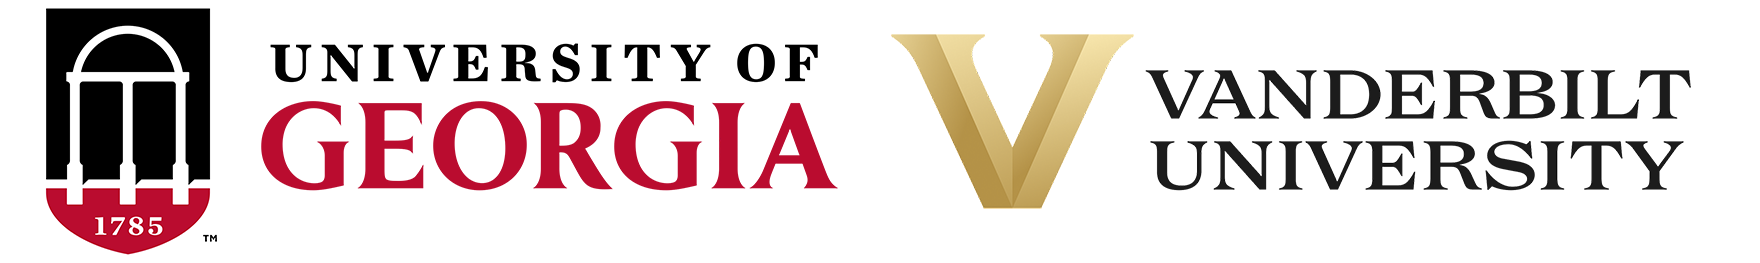 University of Georgia and Vanderbilt University logos